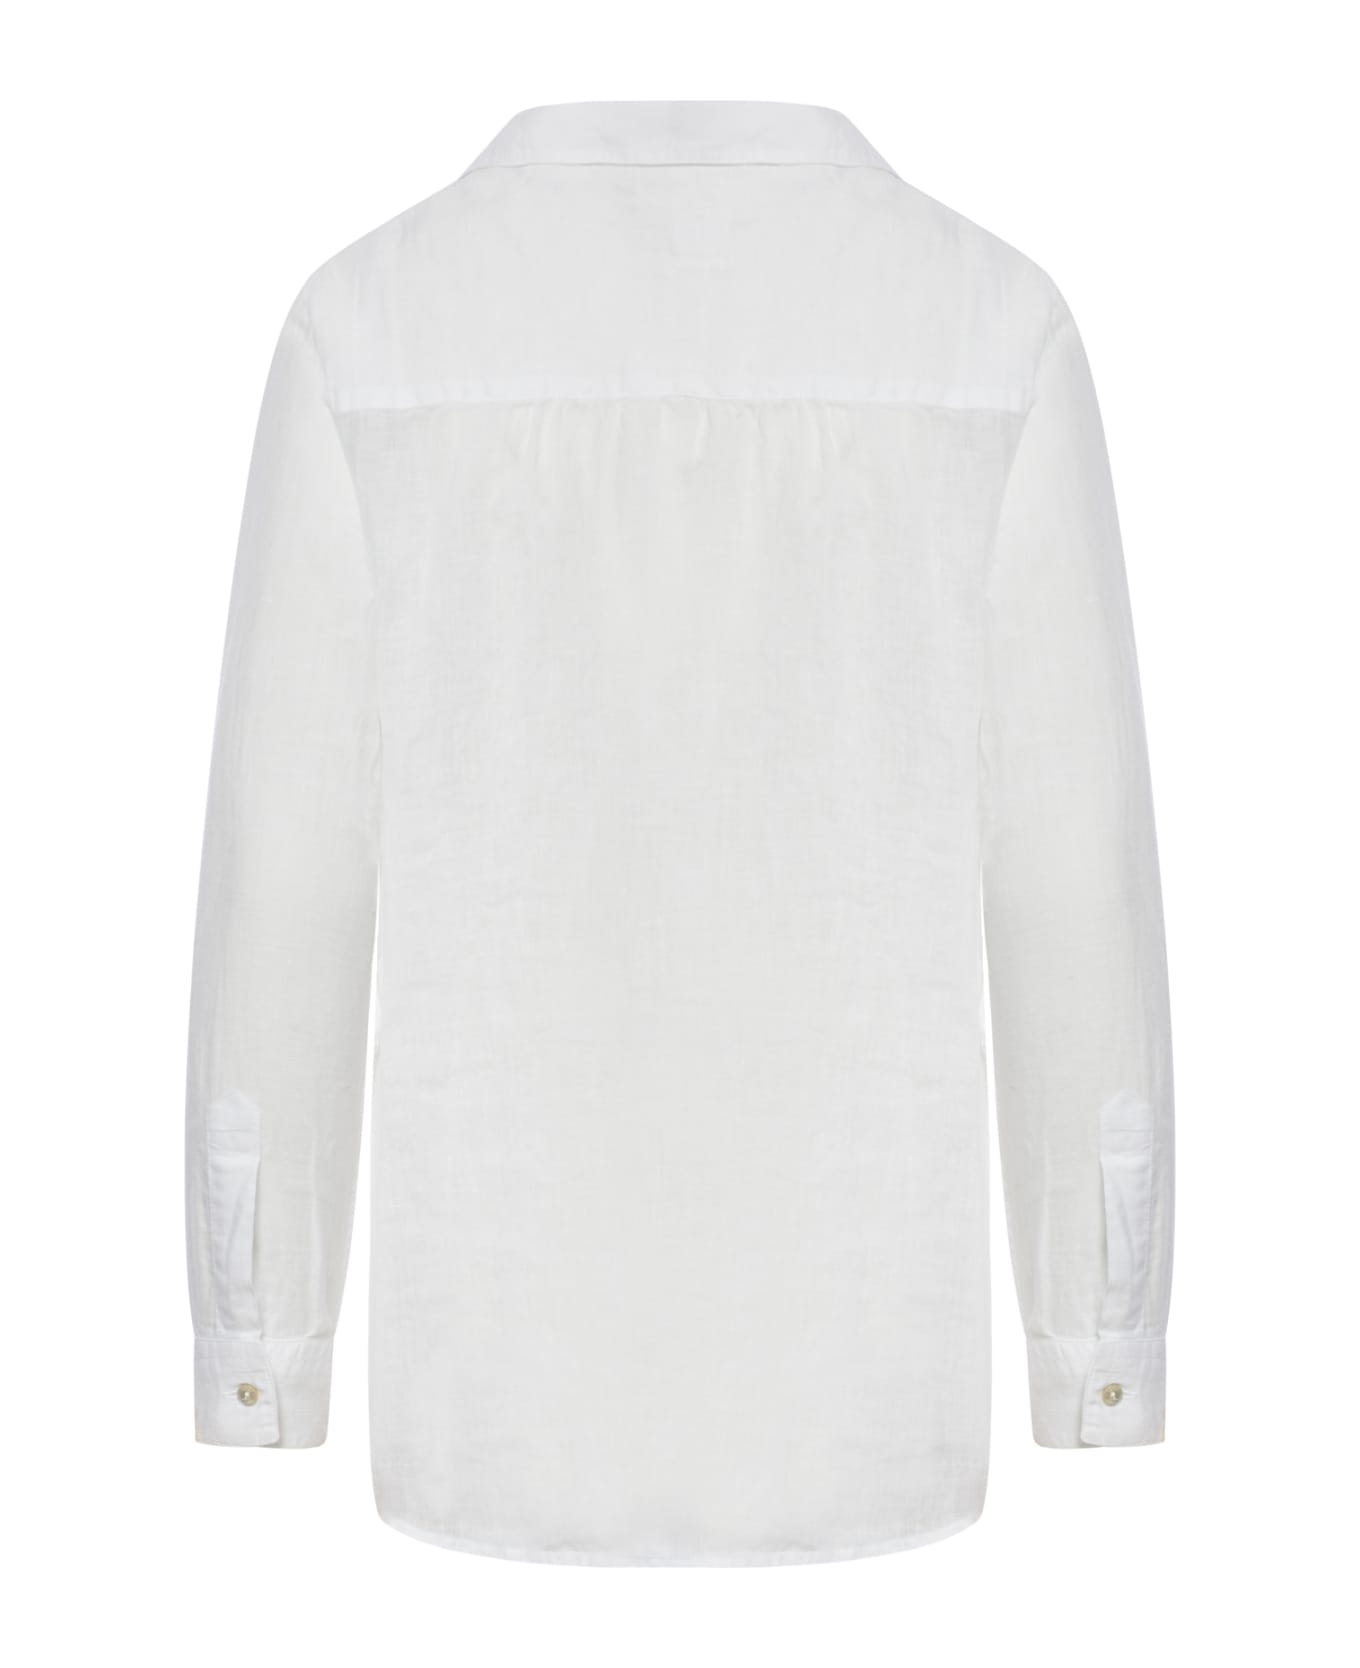 120% Lino Long Sleeve Woman Shirt - White シャツ